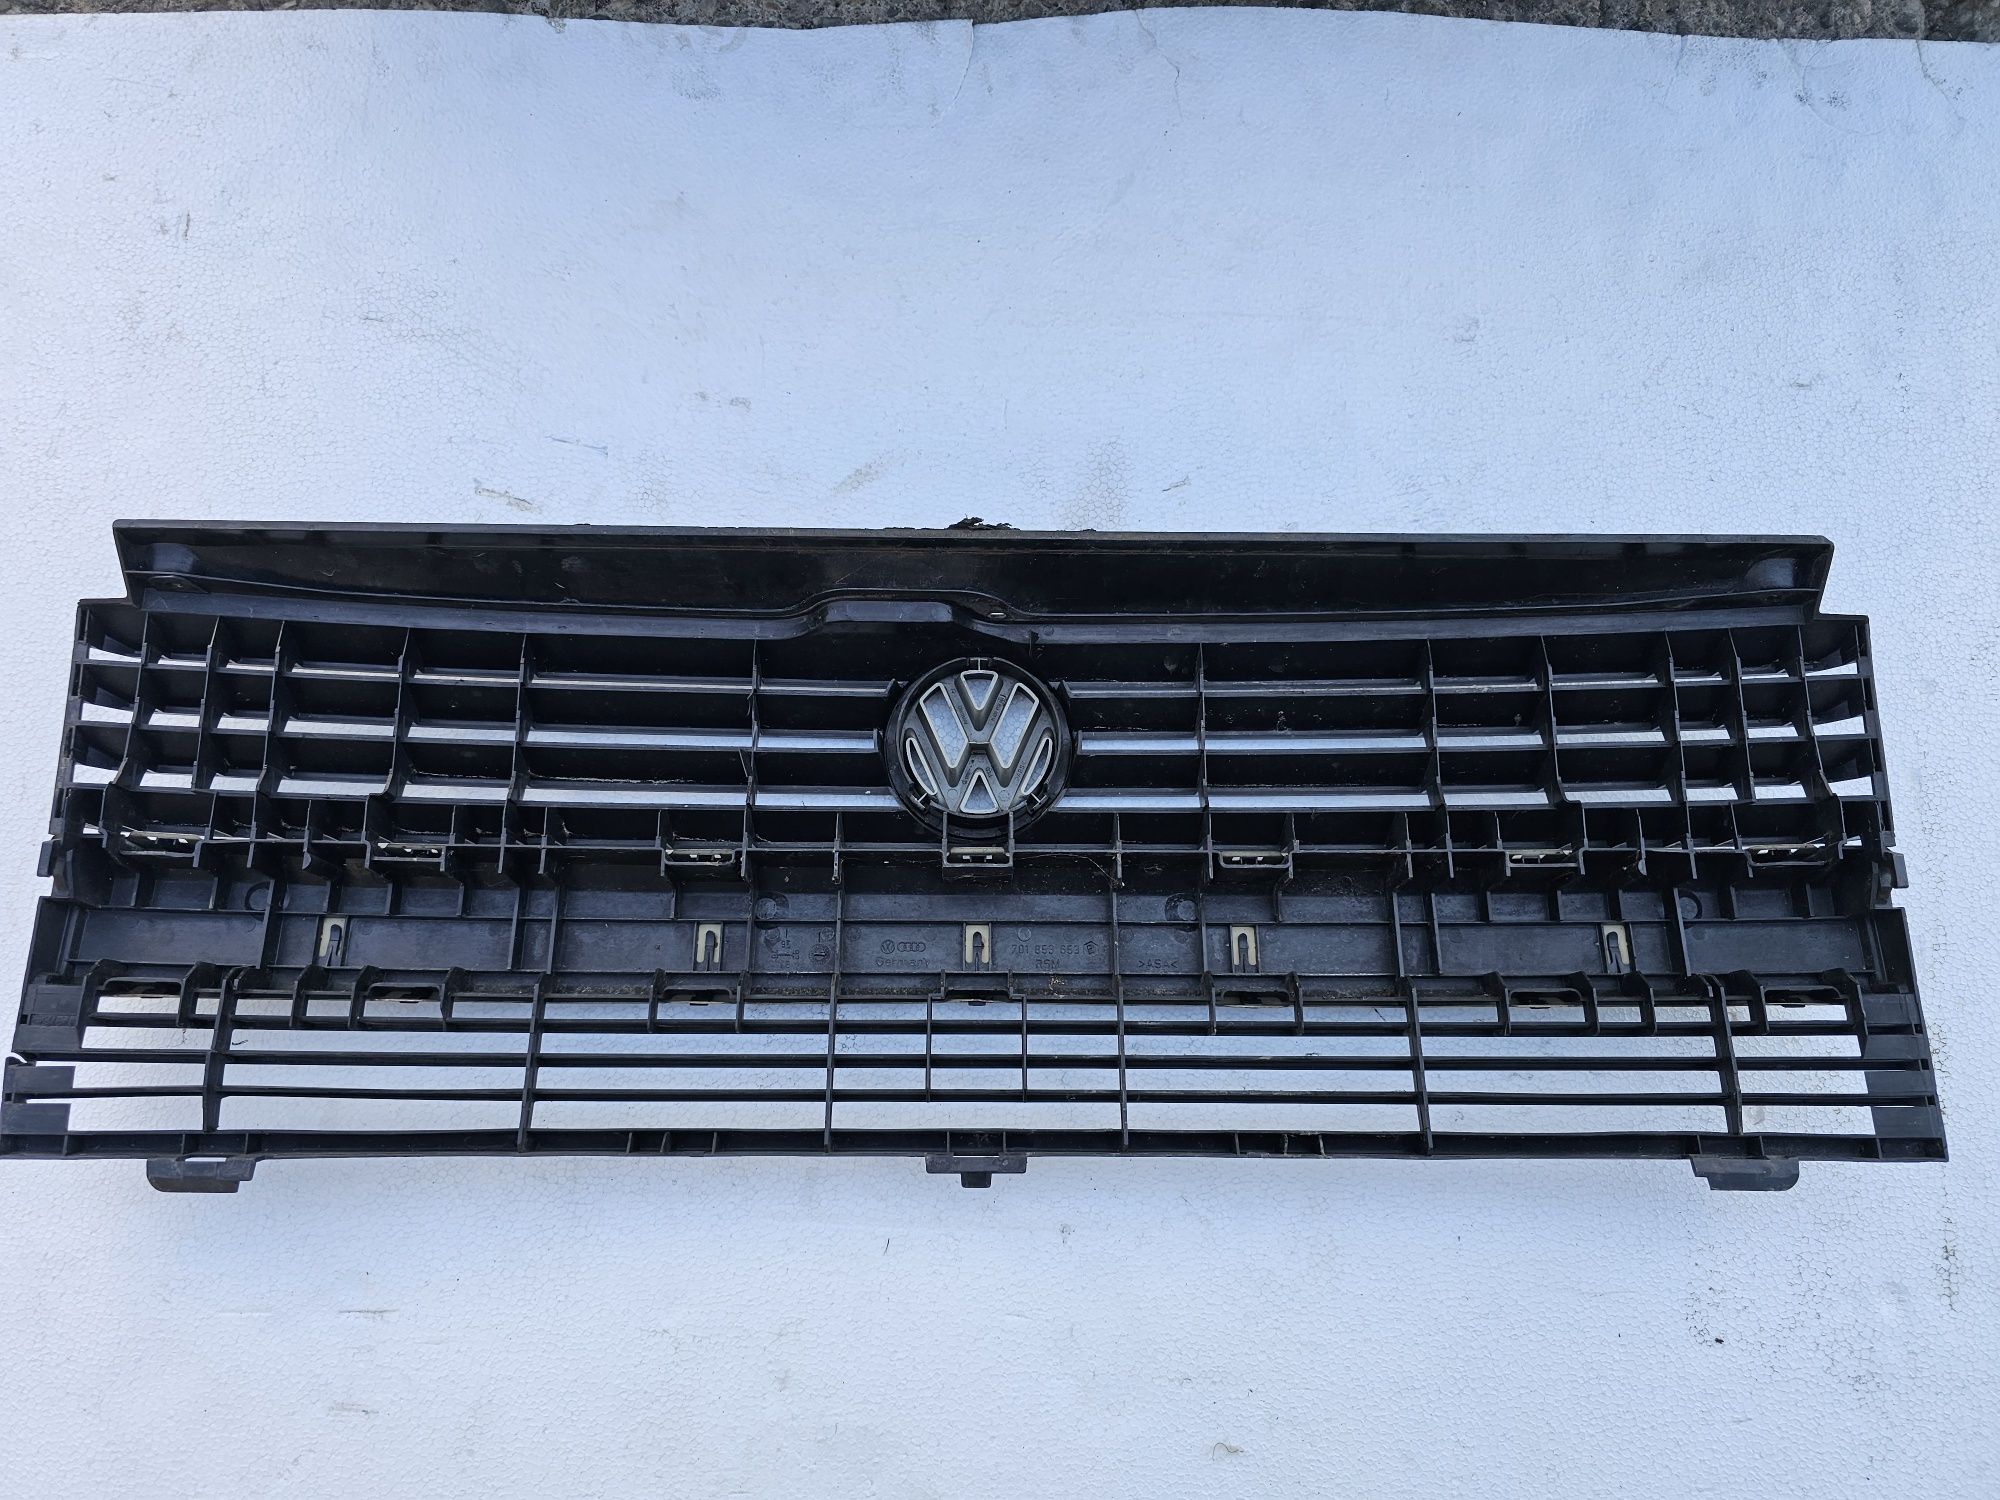 Grila fata originala Volkswagen Transporter T4 non-facelift 

Prezinta